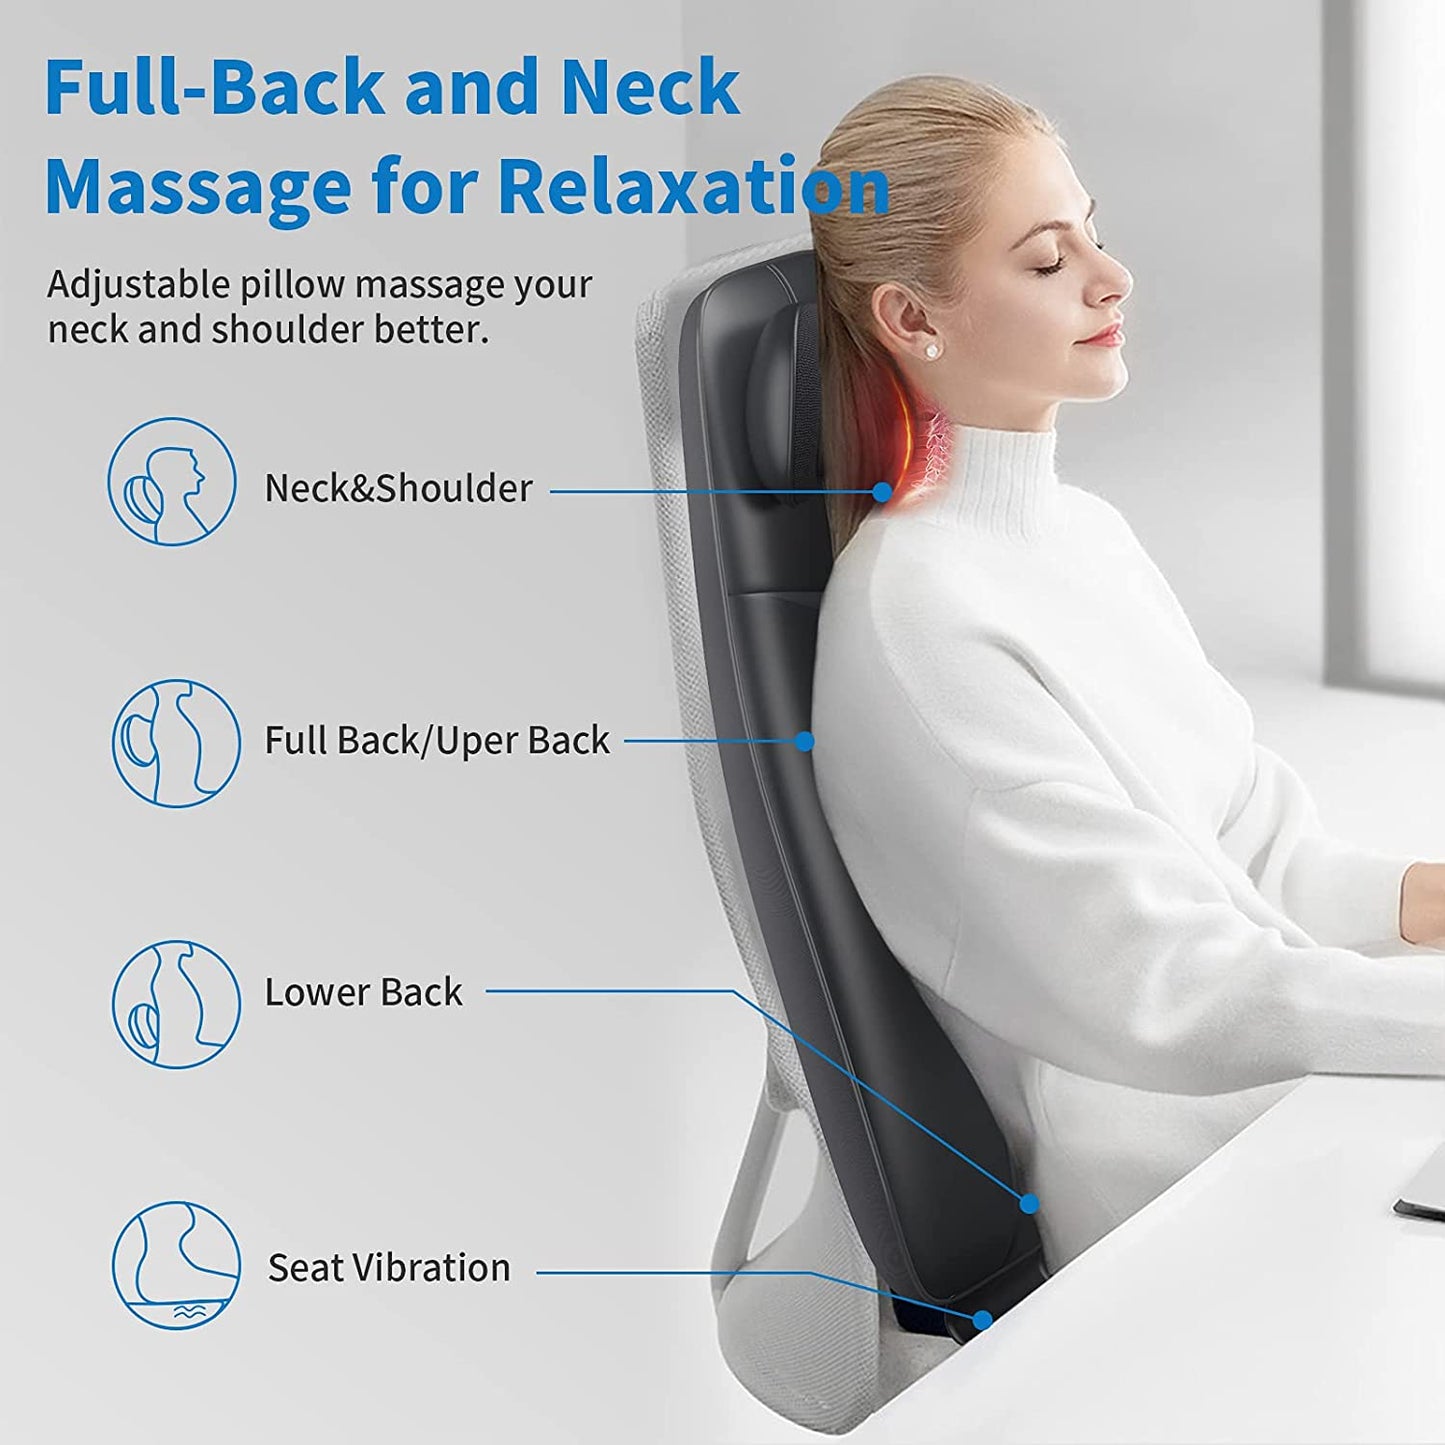 Back Massager with Heat, RENPHO Height Adjustable Shiatsu Neck and Back Massage Chair Pad, Massage Seat.